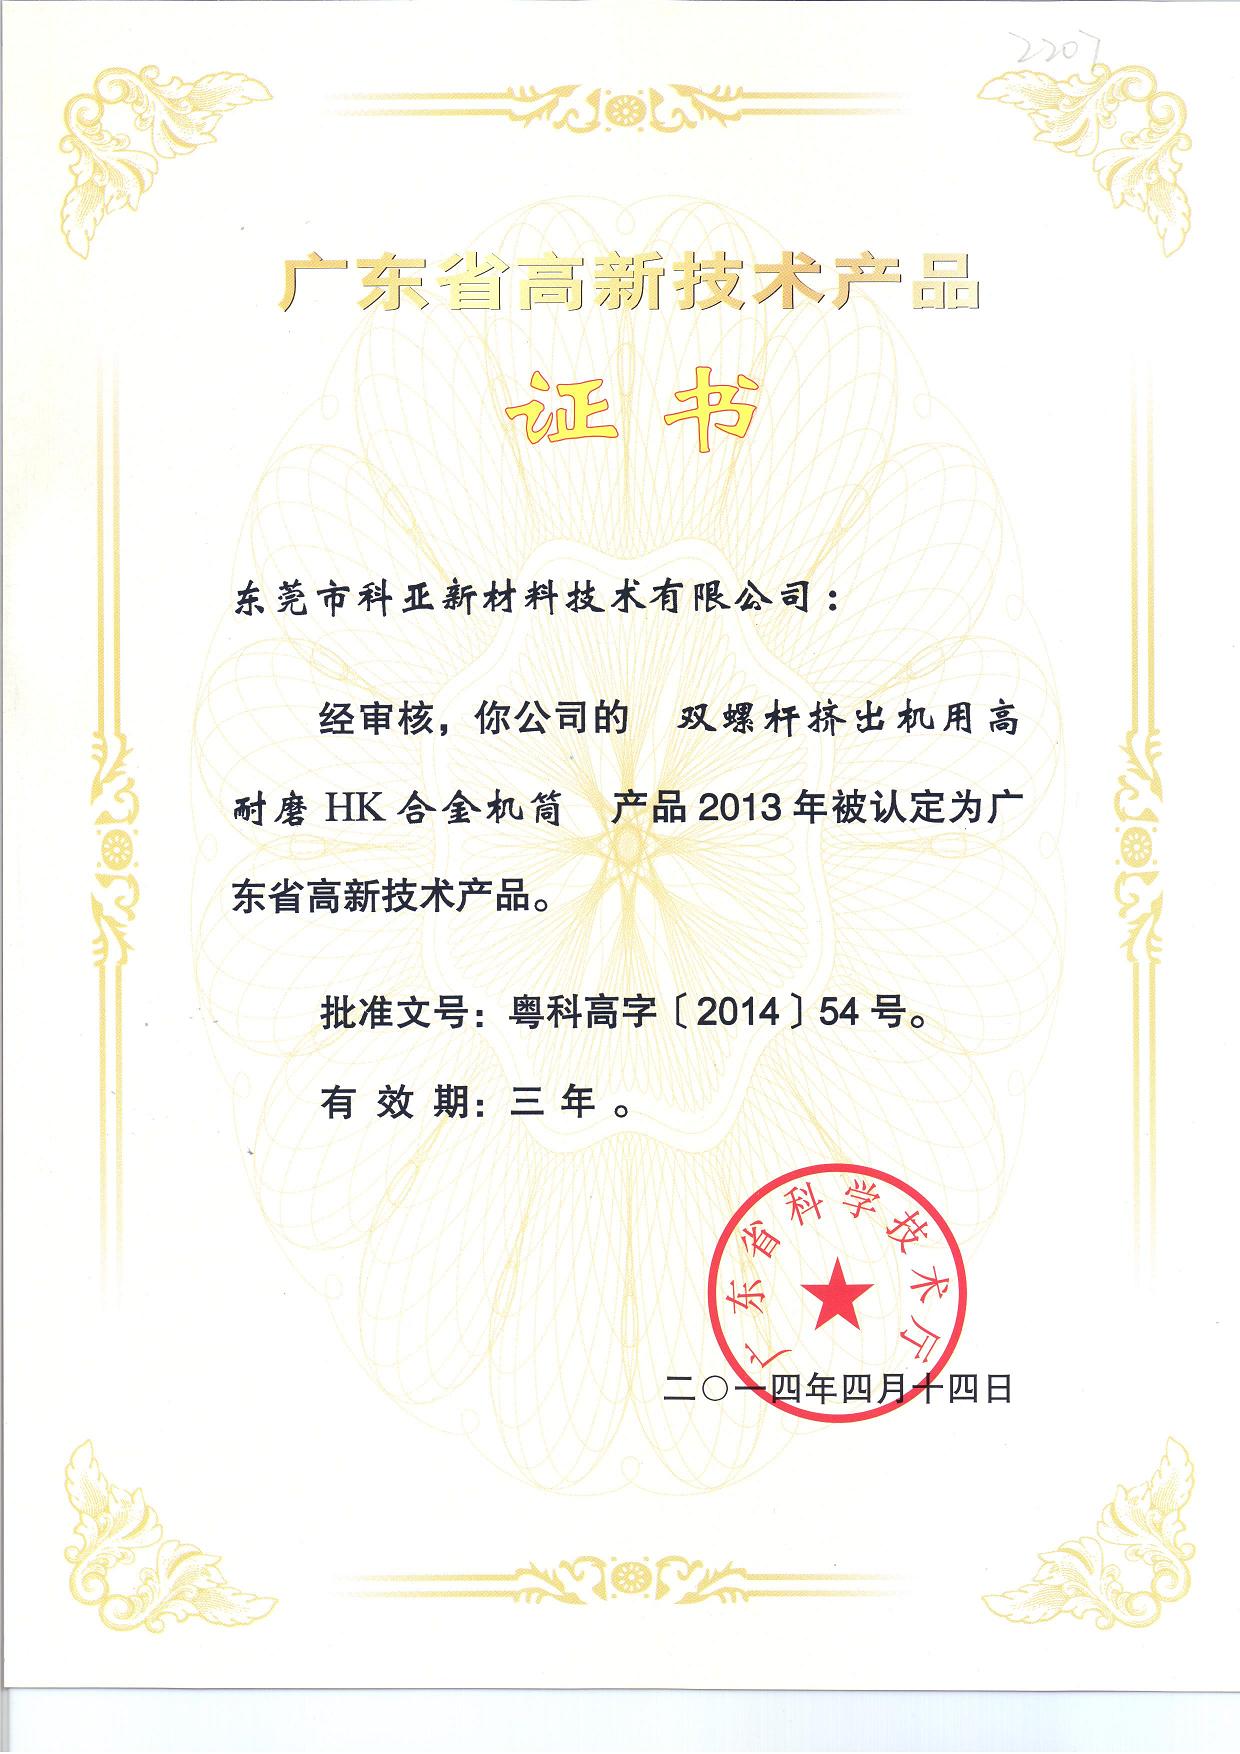 HK高新技术产品证书